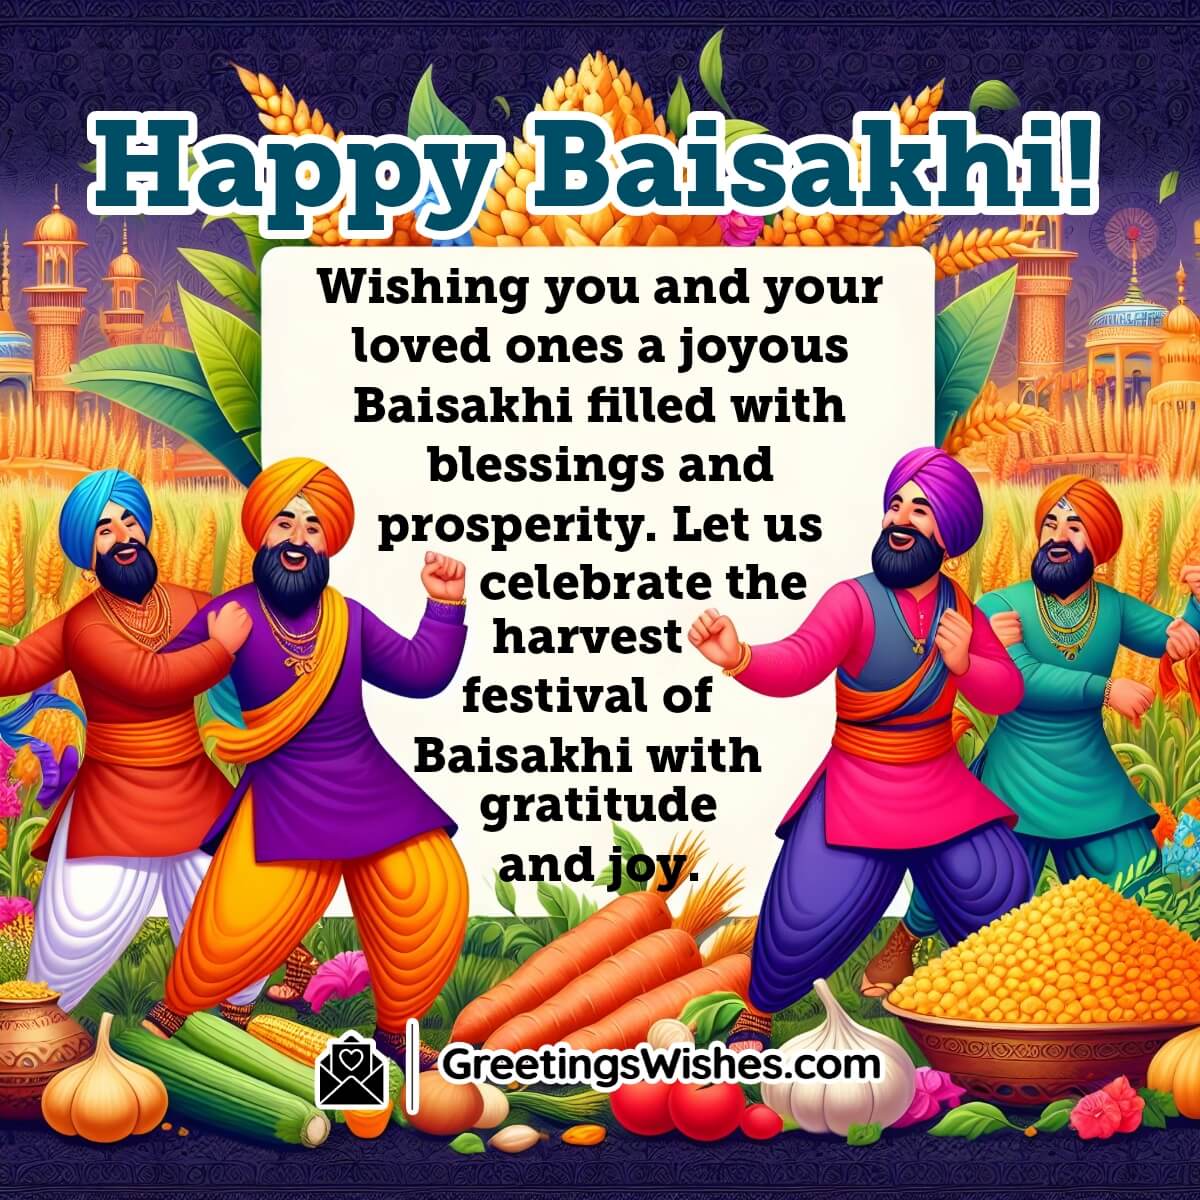 Happy Baisakhi Message